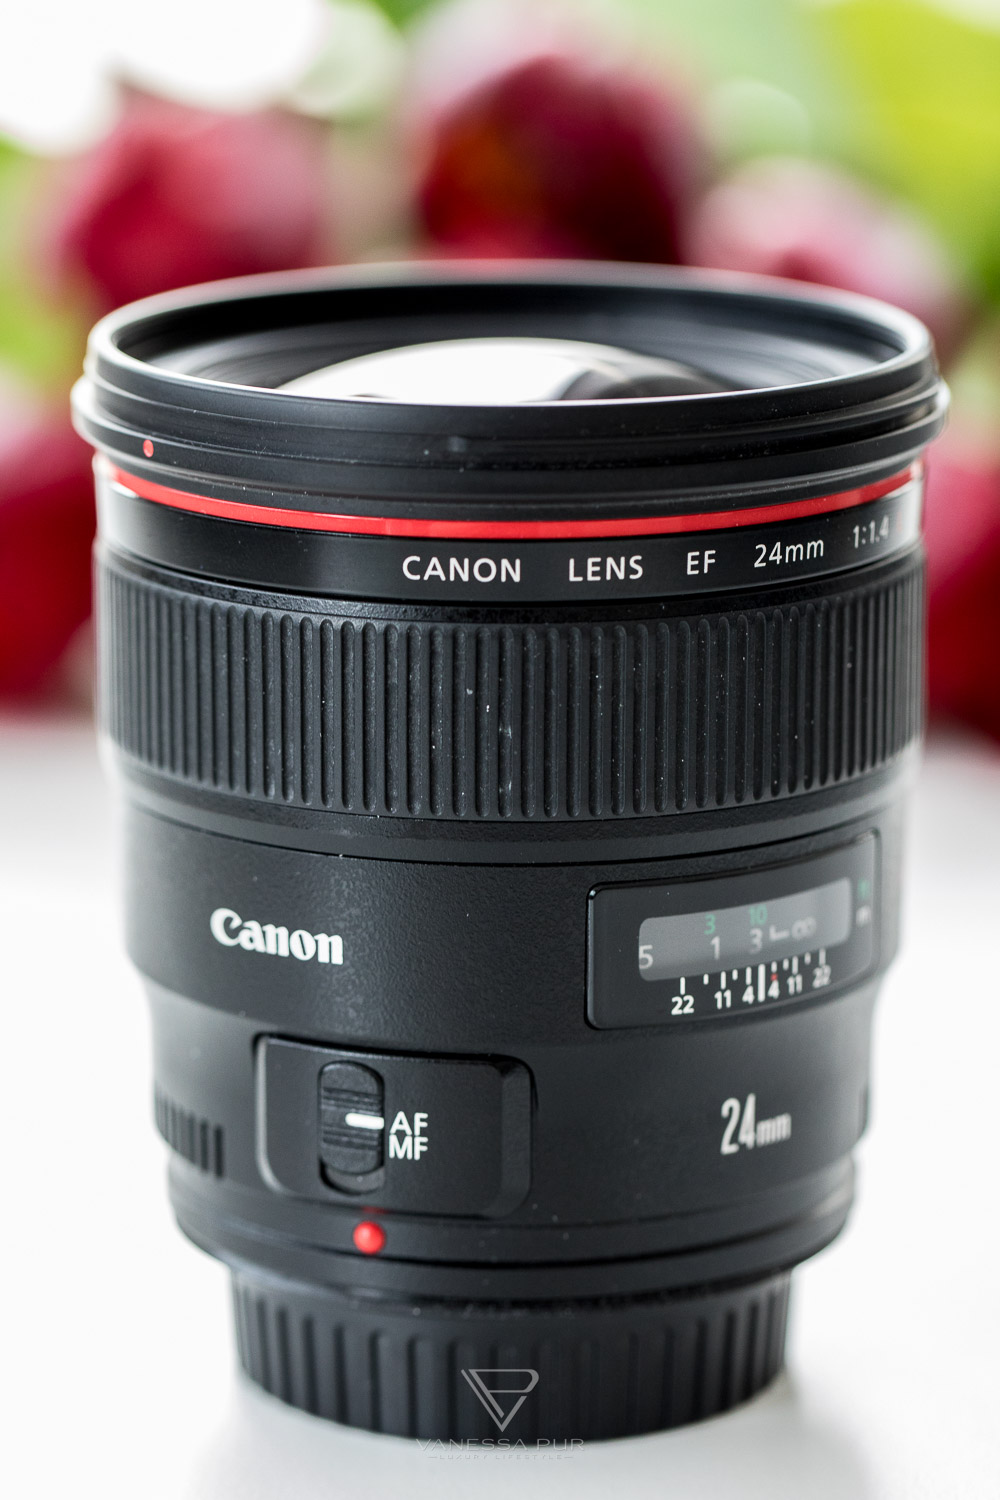 Canon EF 24mm f/1.4L II Objektiv im Test - Das perfekte Video-Objektiv? Objektiv im Test für Video und Foto - Fotoblog und Videoblogger - Vlog & Blog